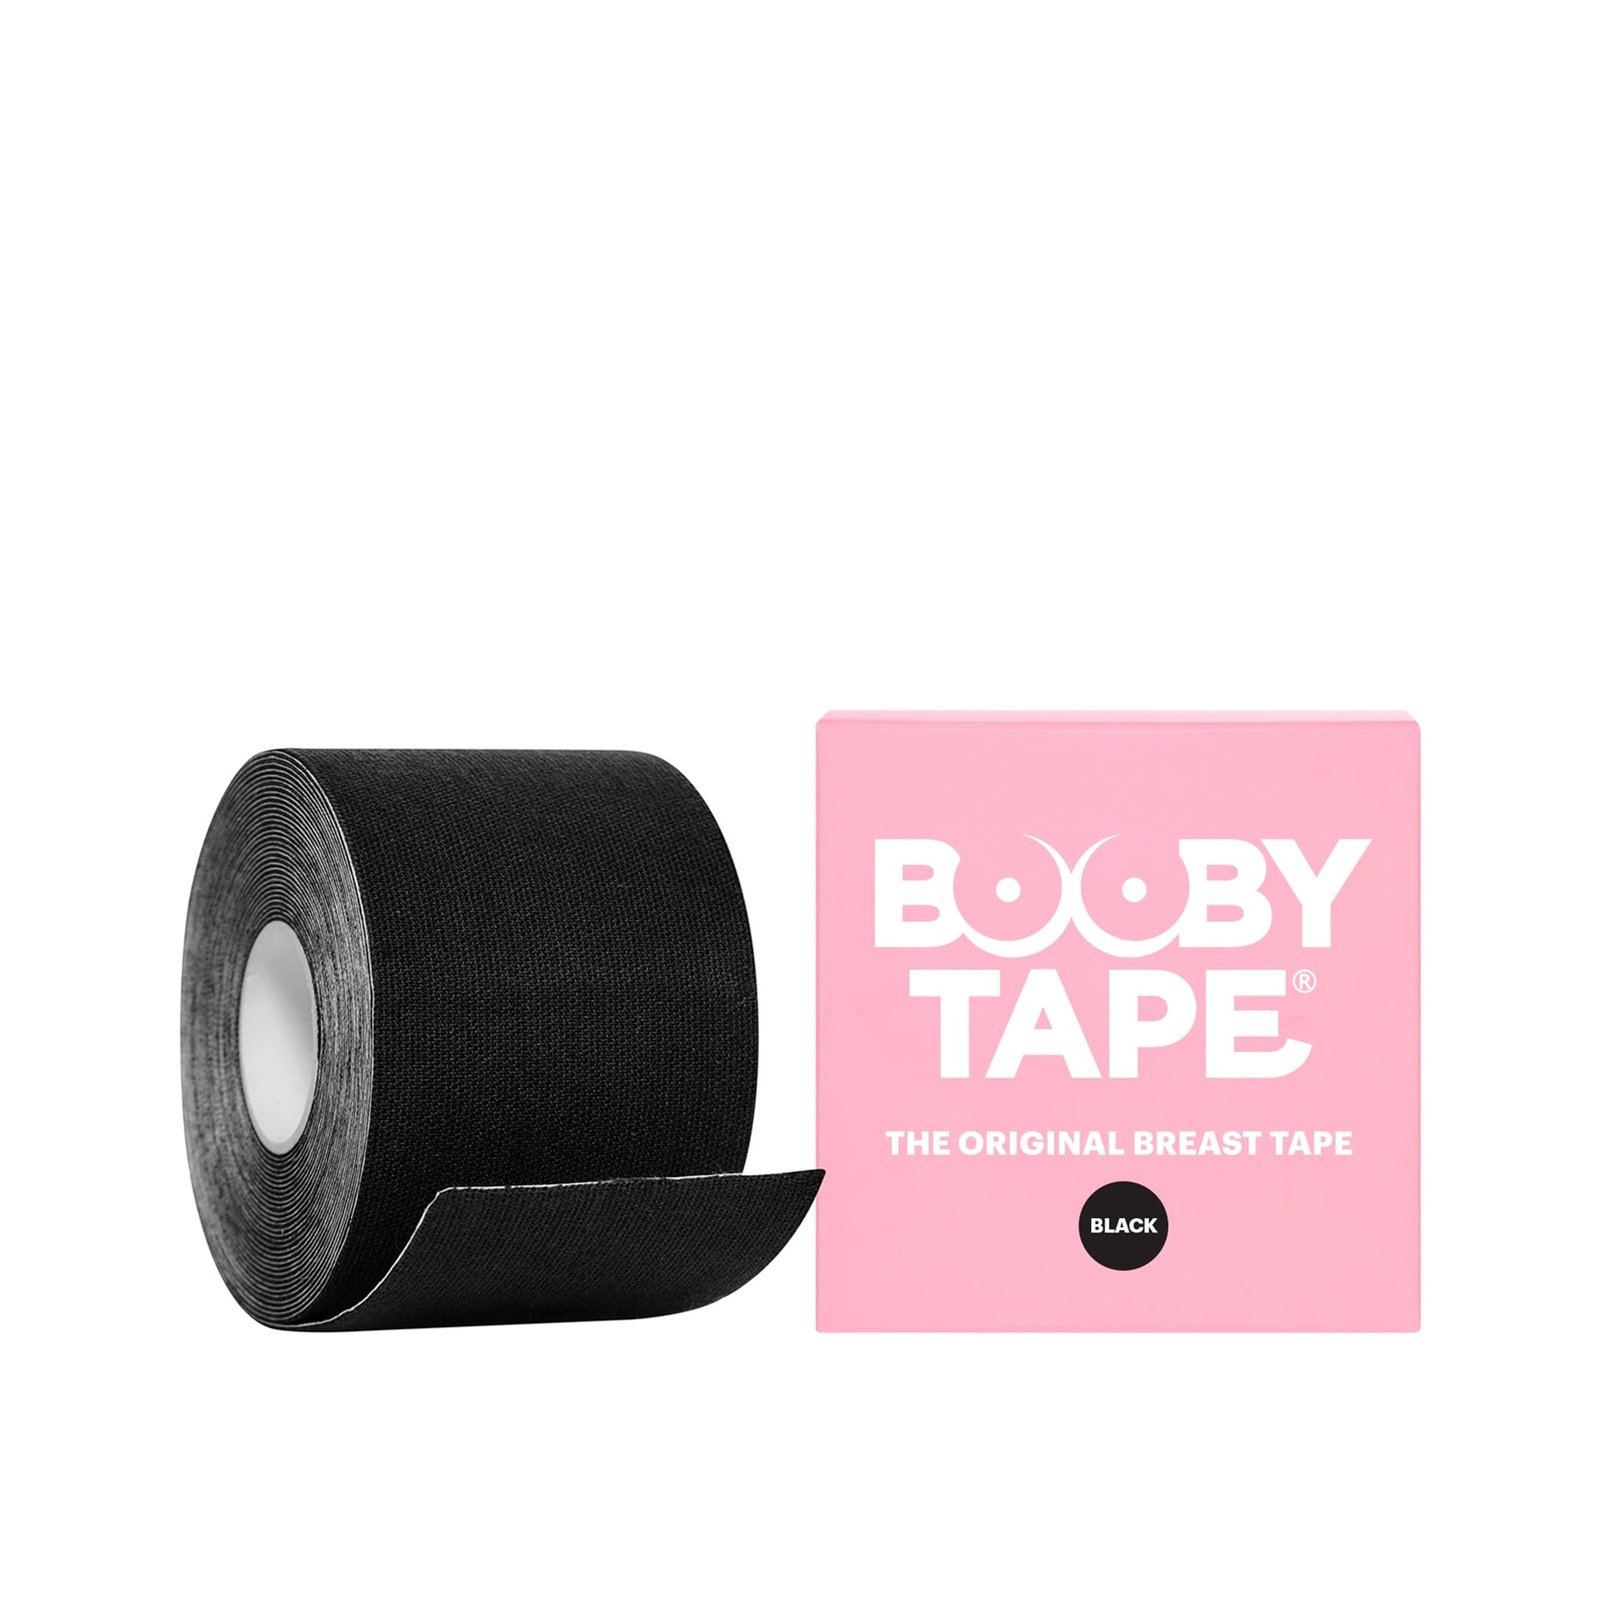 Booby Tape The Original Breast Tape Black 5m